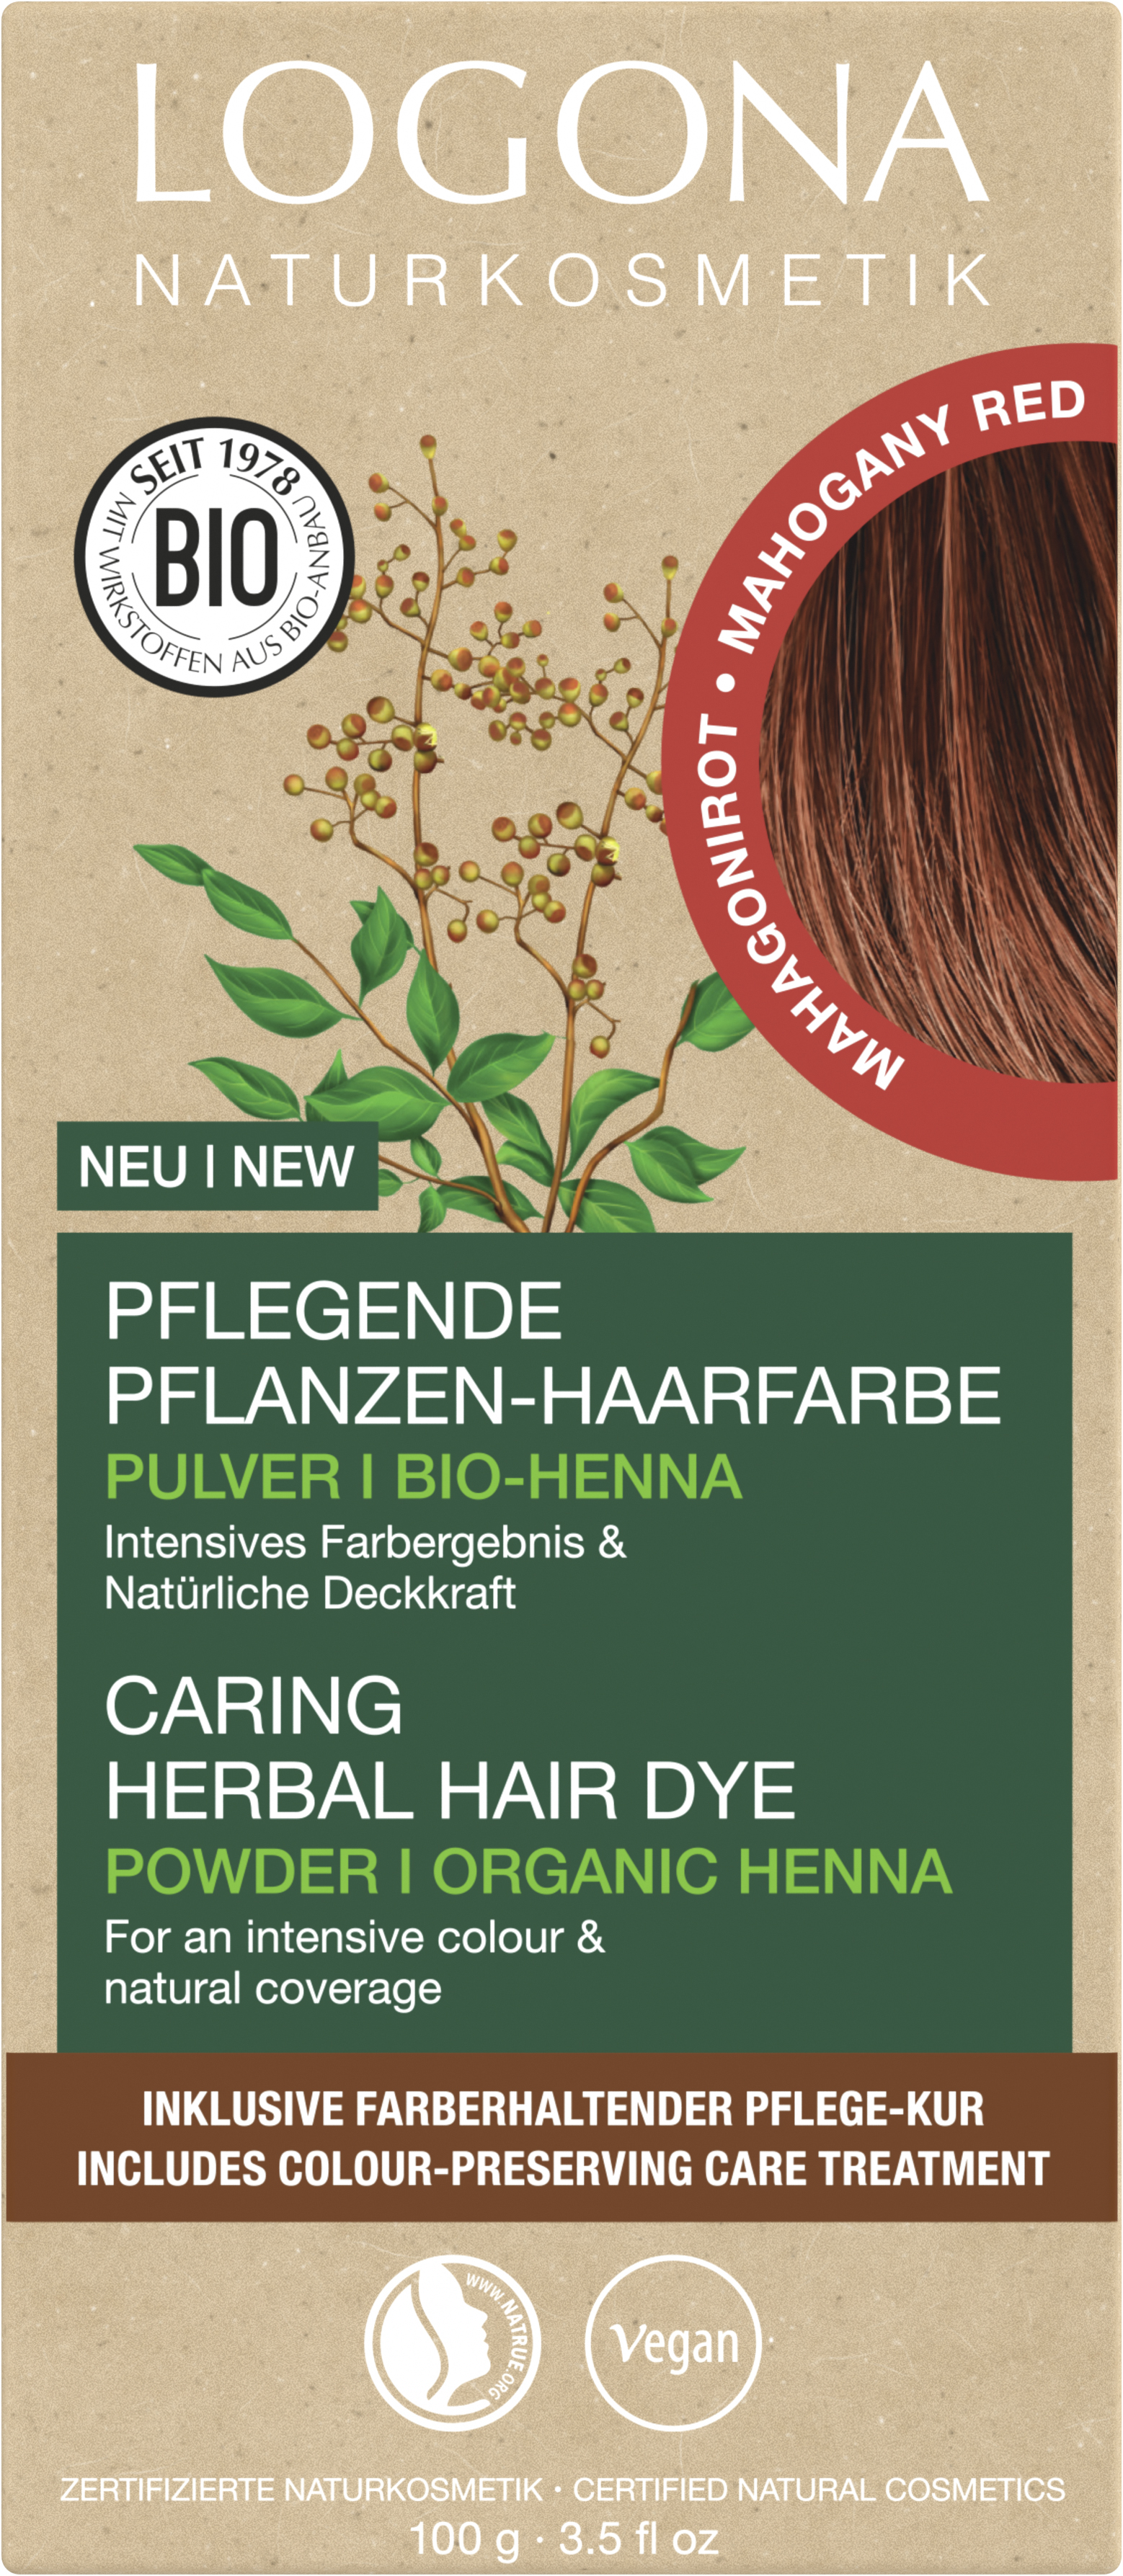 Naturkosmetik MAHAGONIROT LOGONA Pflanzen-Haarfarbe Pulver |